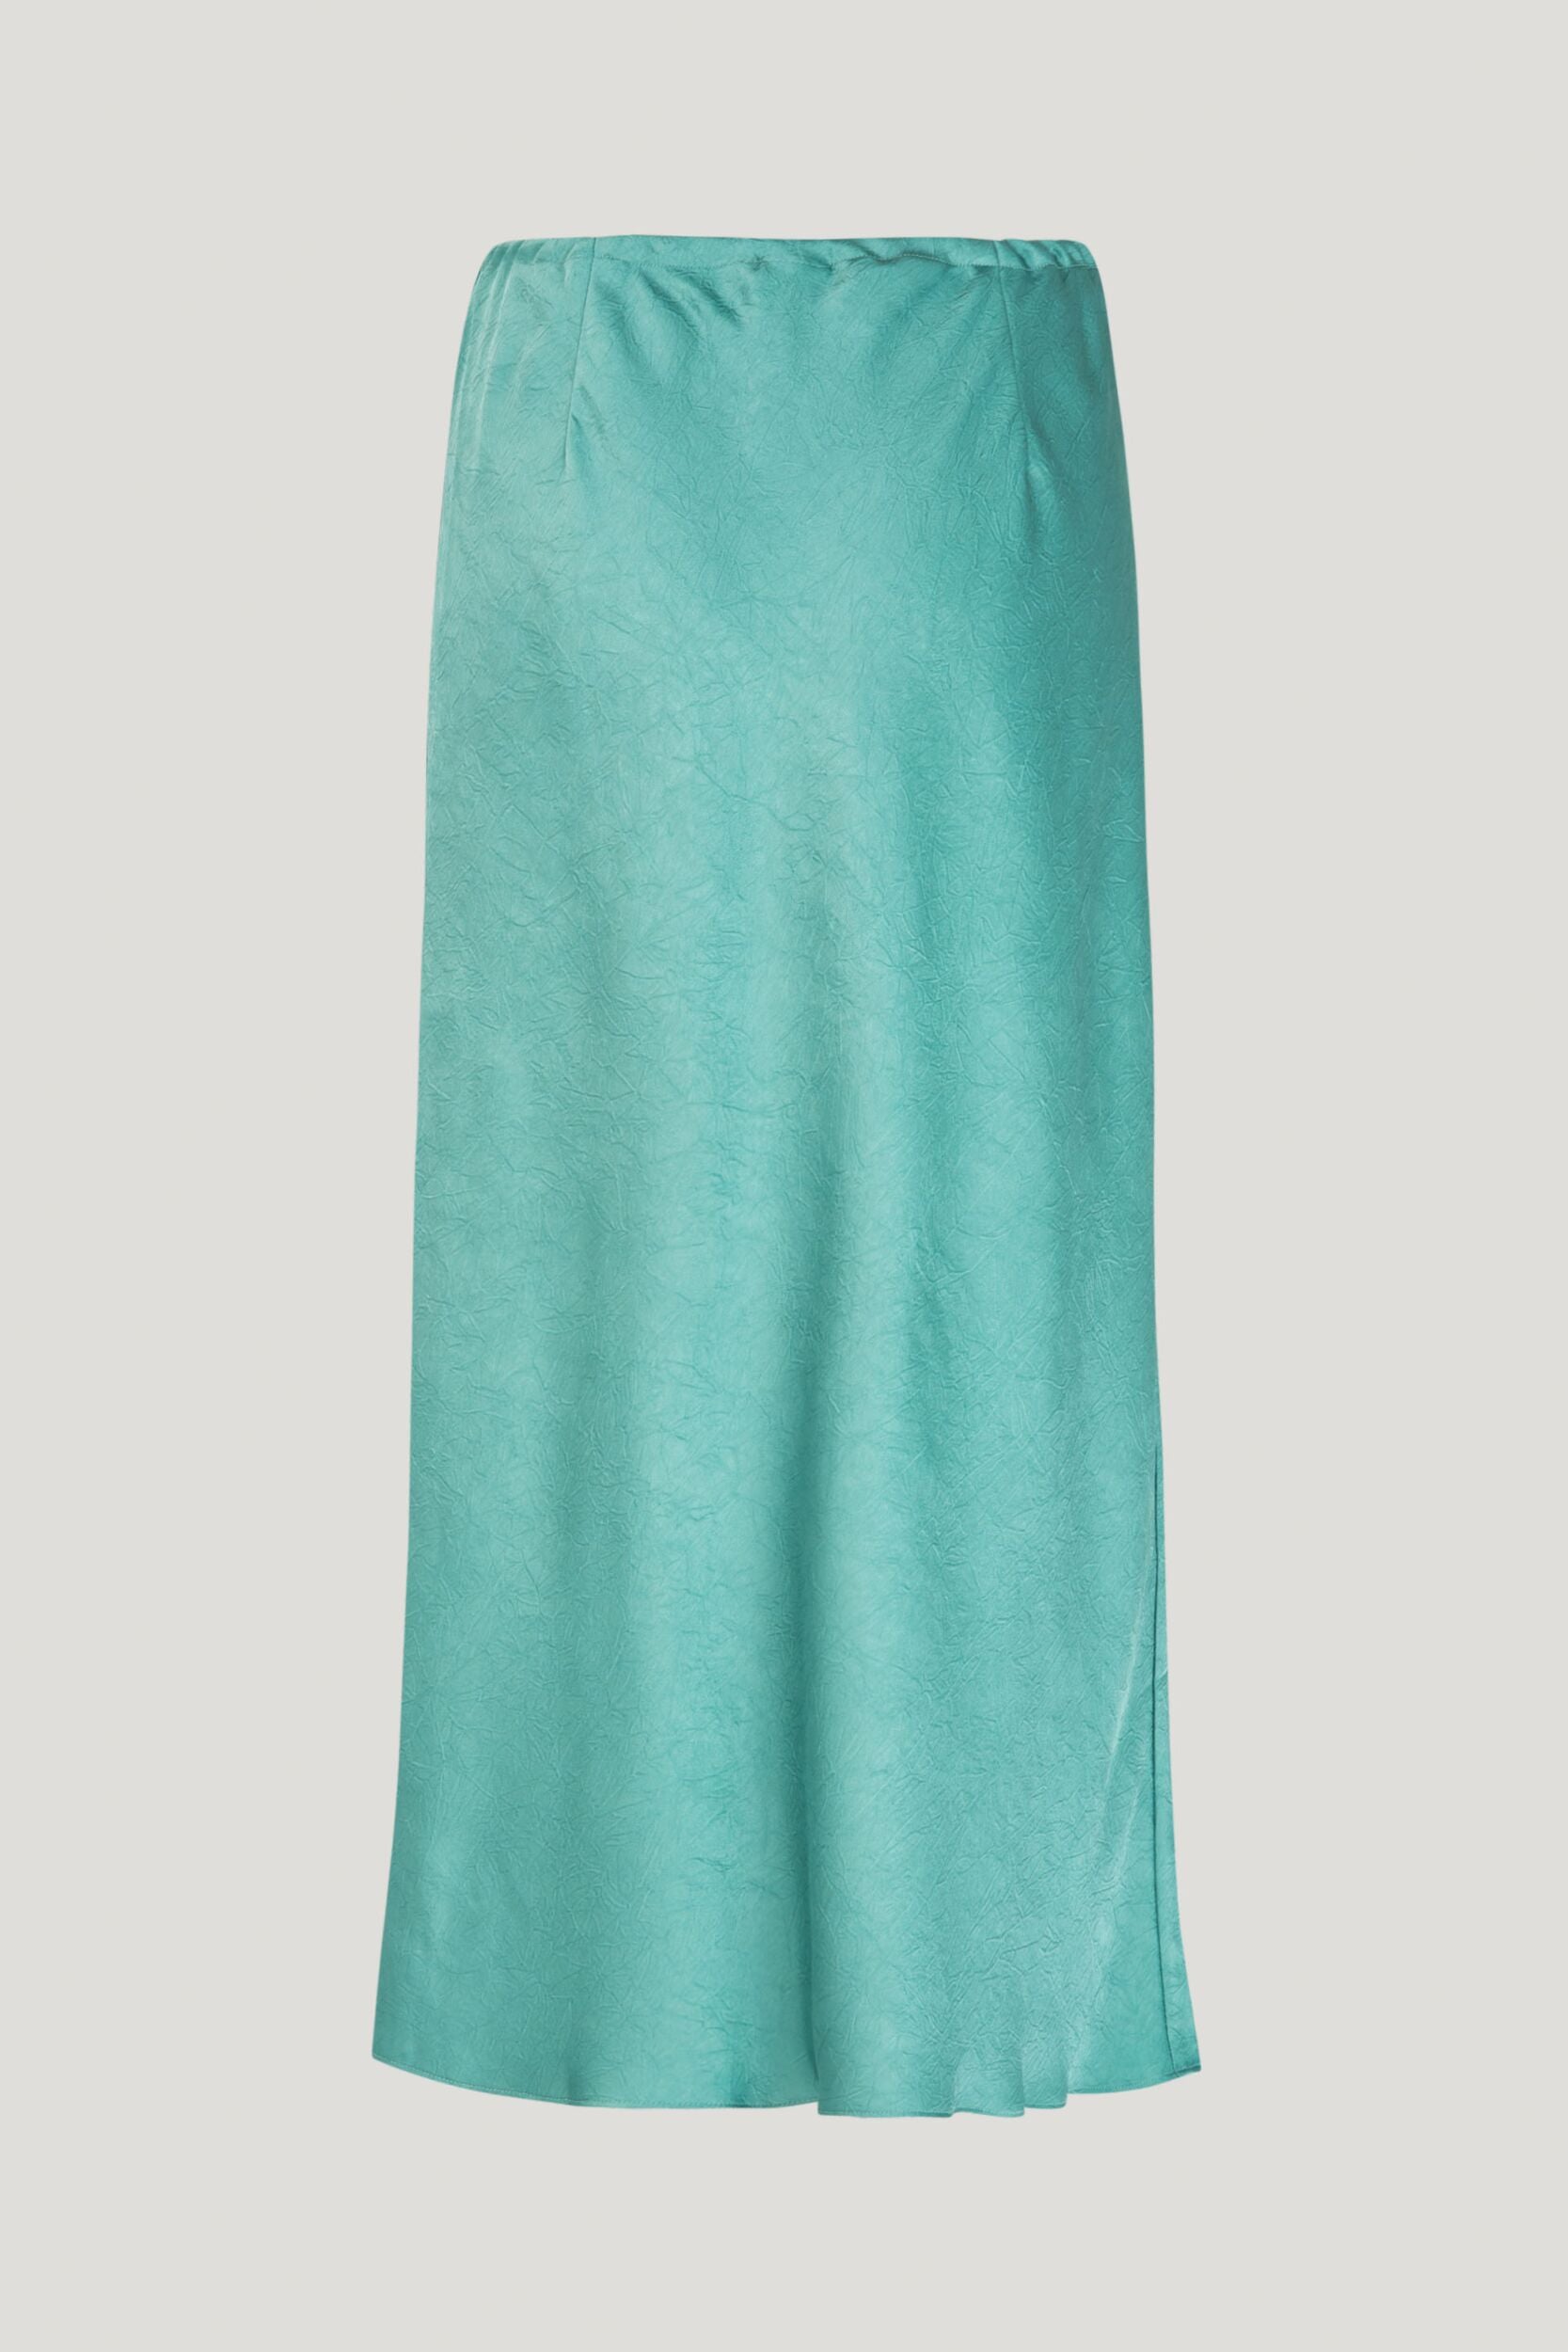 Aqua blue midi slip skirt with drawstring waist